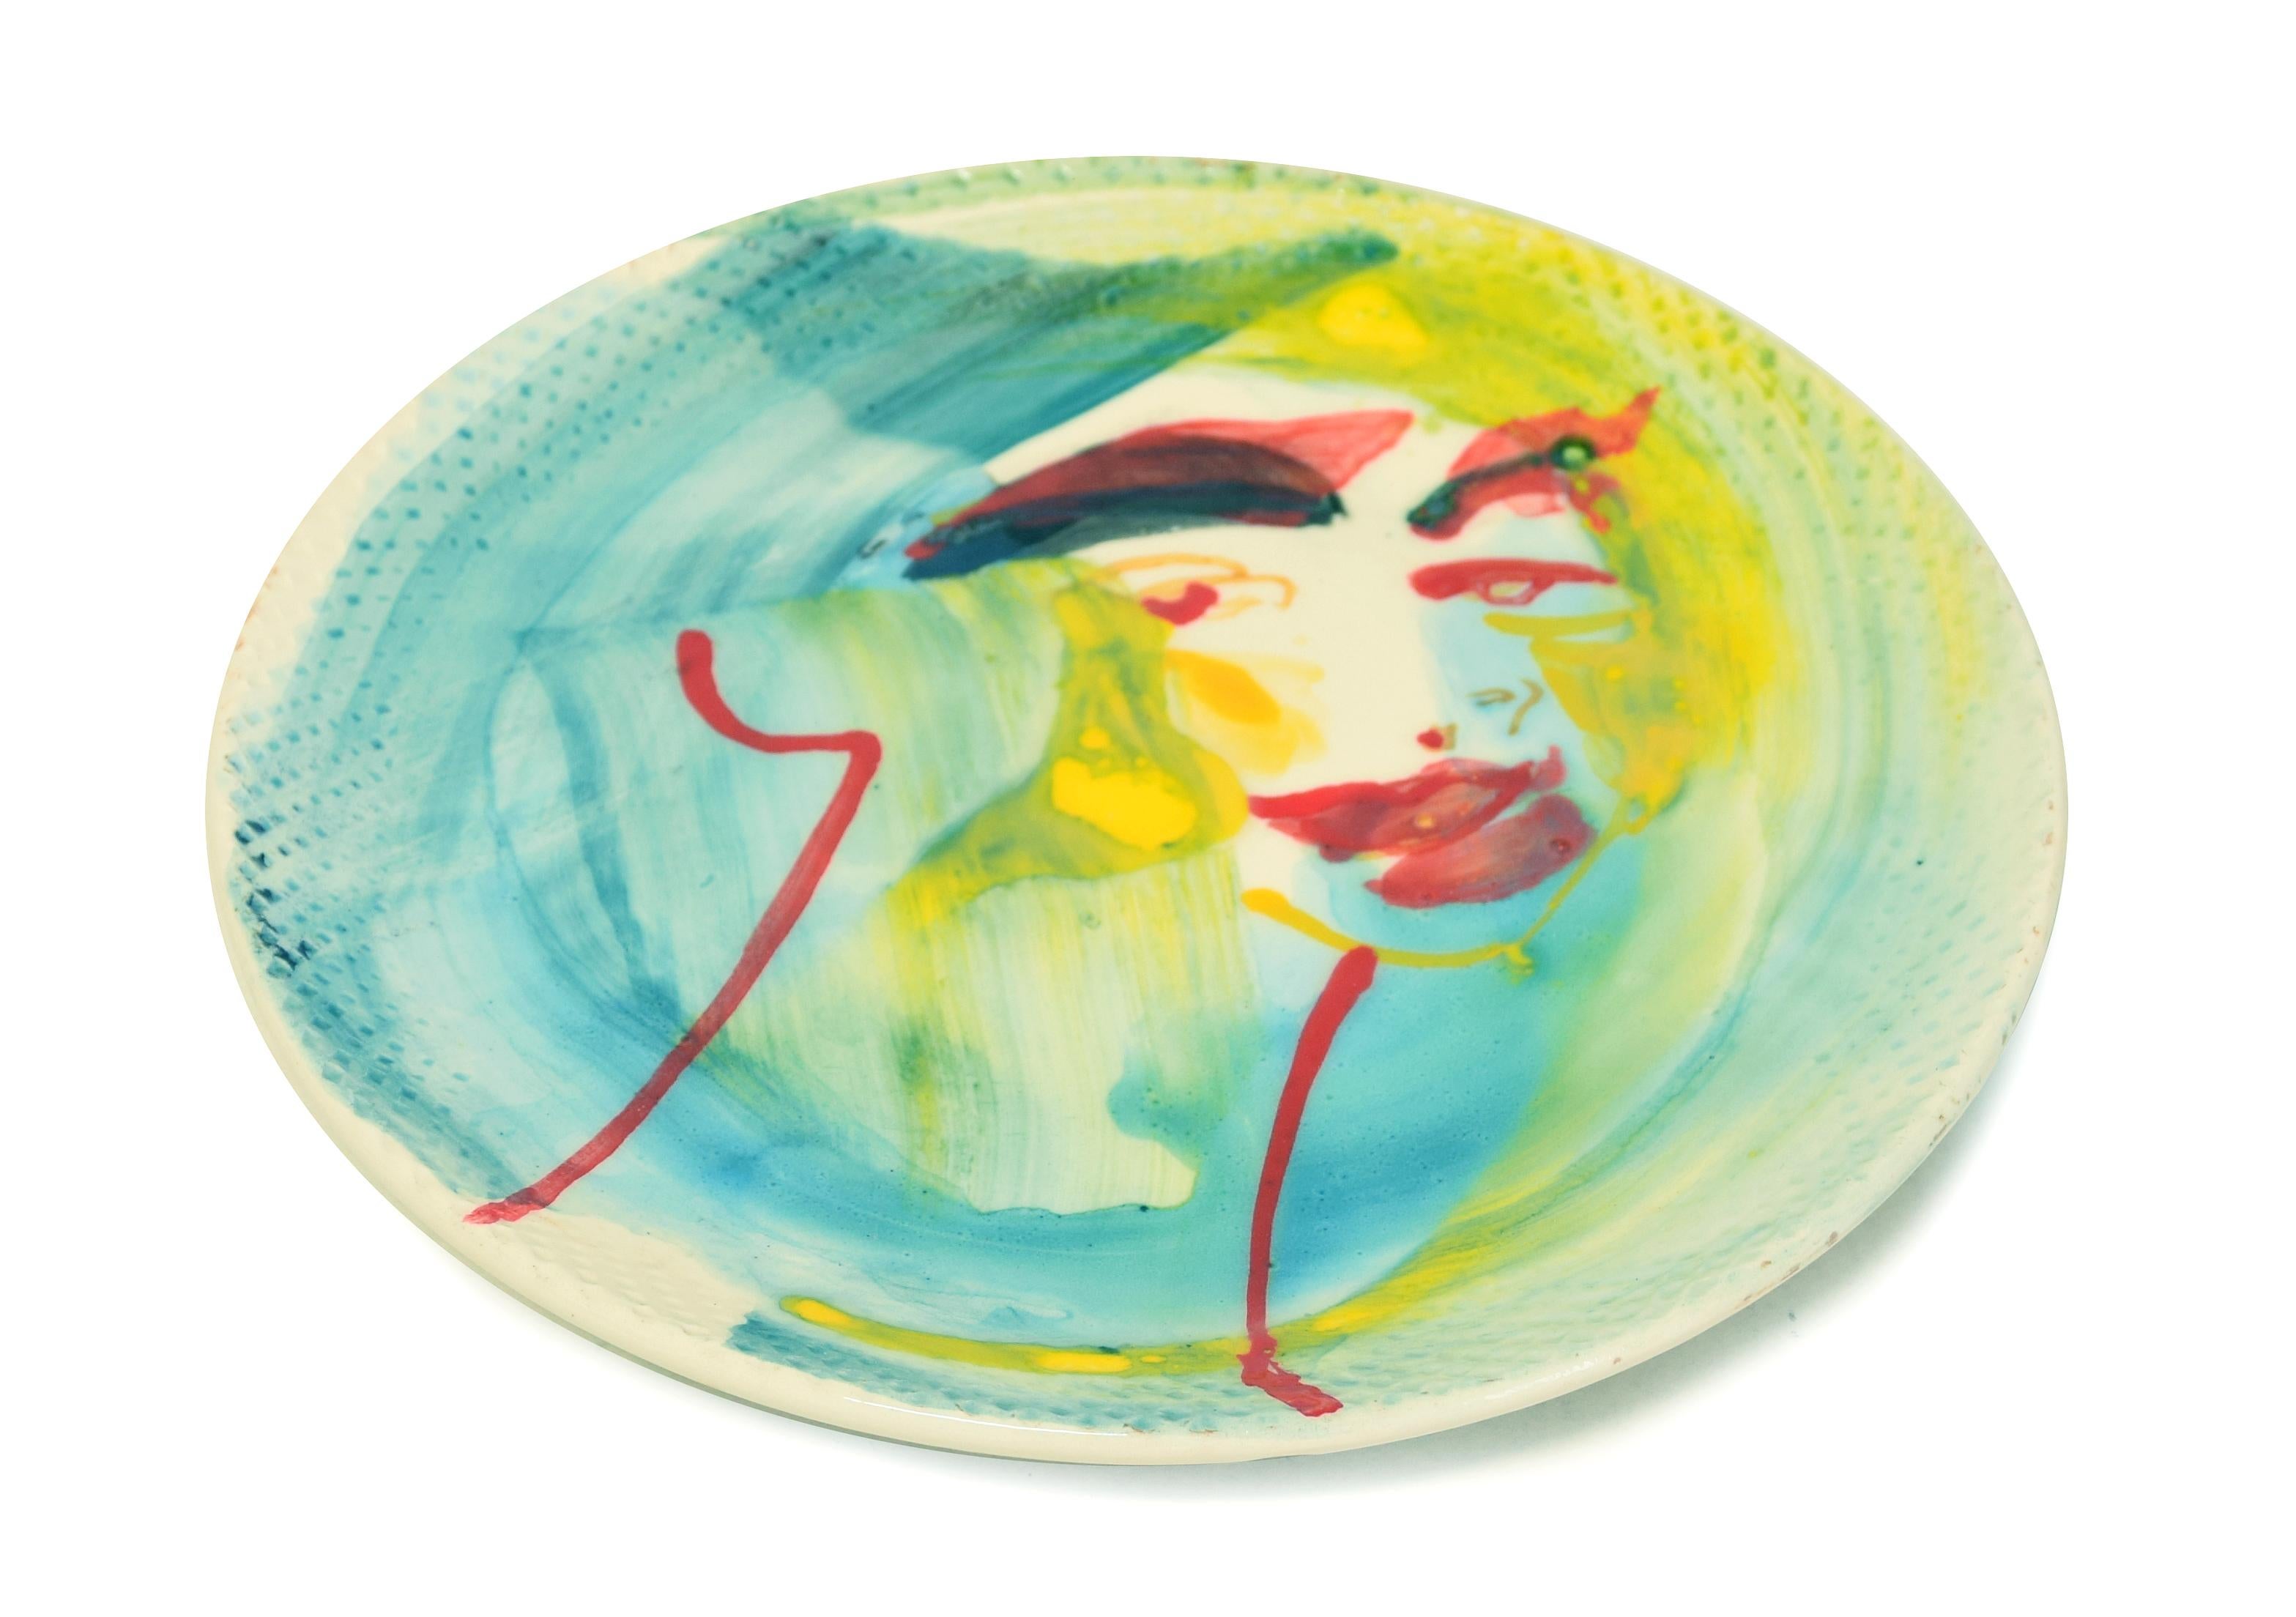 Look at You - Original  Hand-Made Flat Ceramic Dish by A. Kurakina - 2019 - Contemporary Art by Anastasia Kurakina